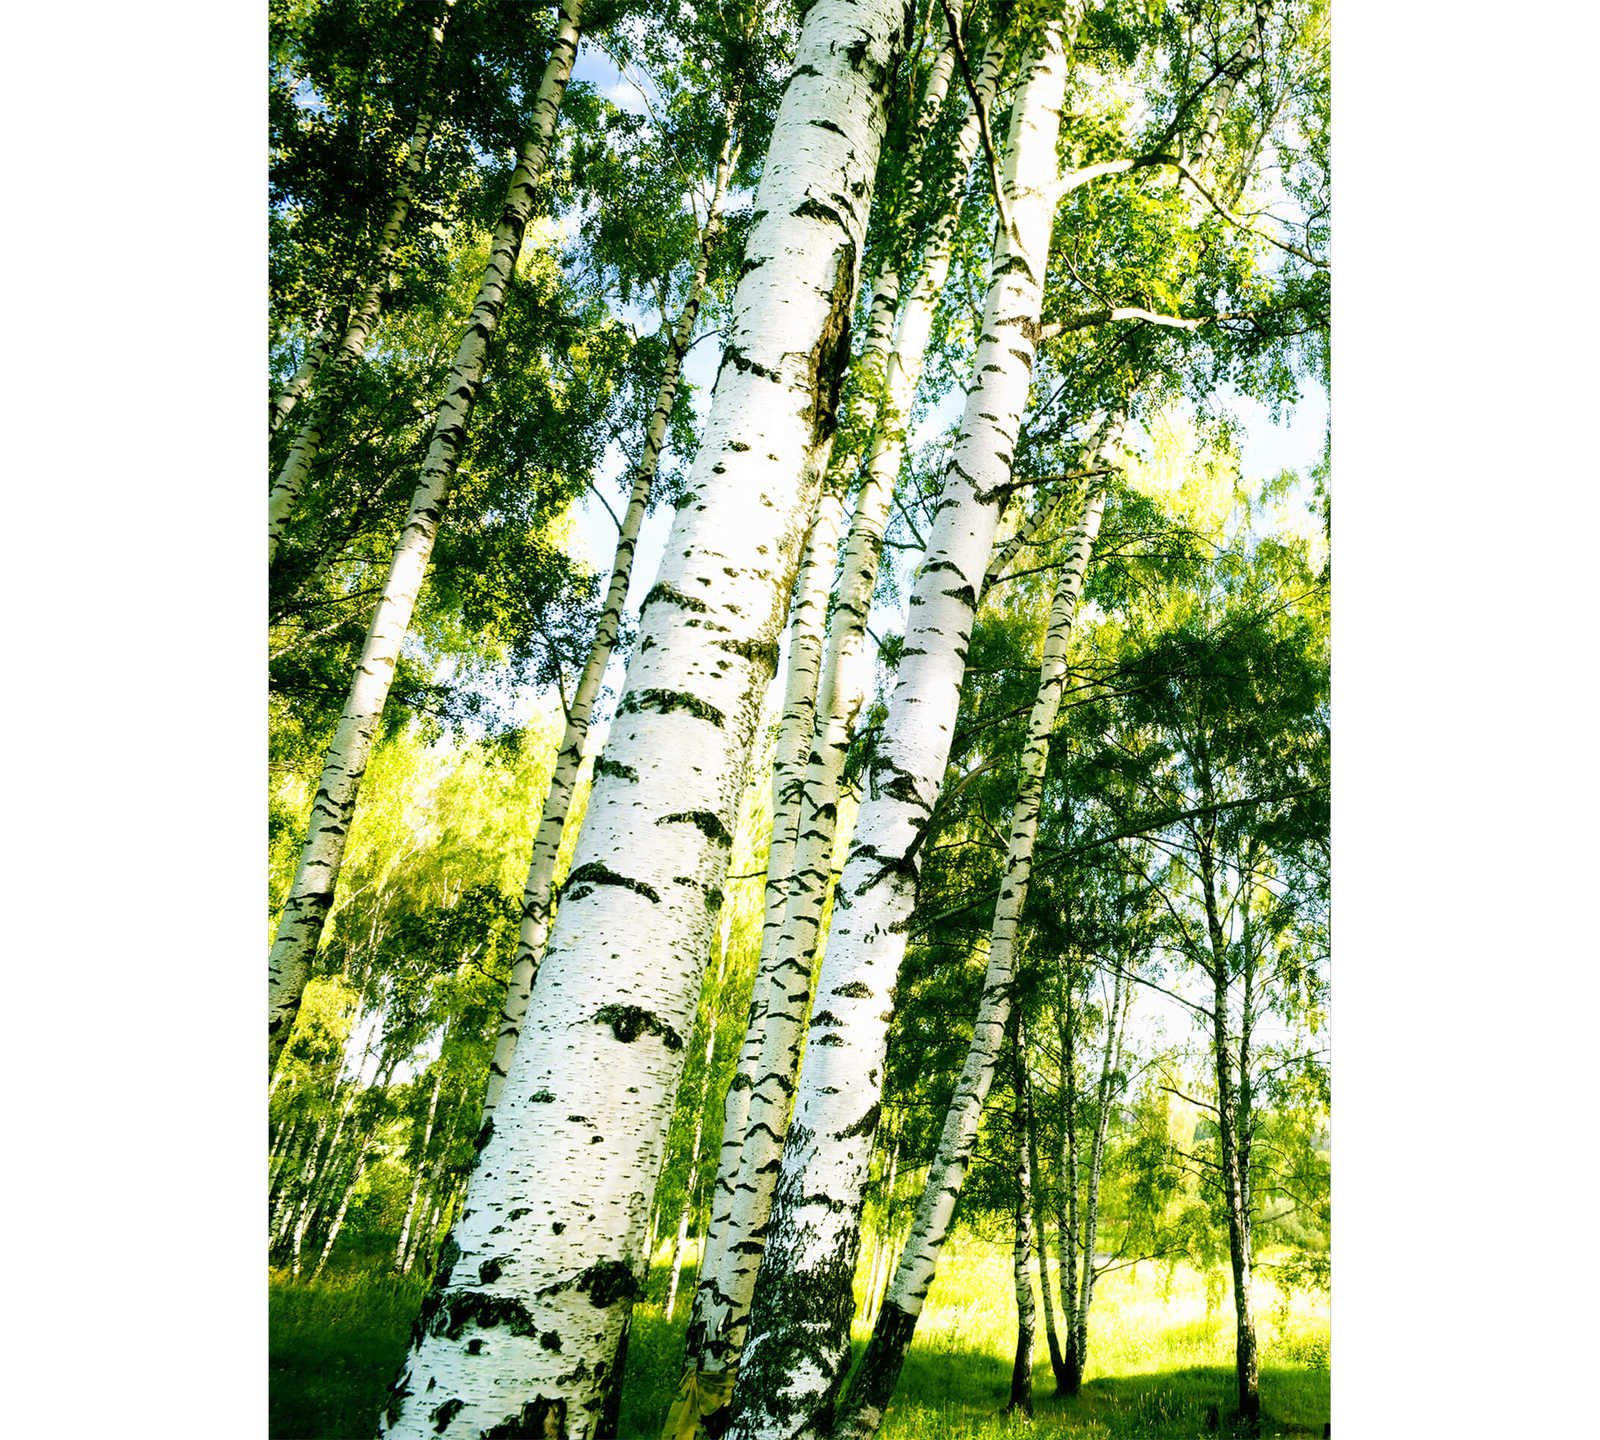         Birch forest photo wallpaper in portrait format - green, white
    